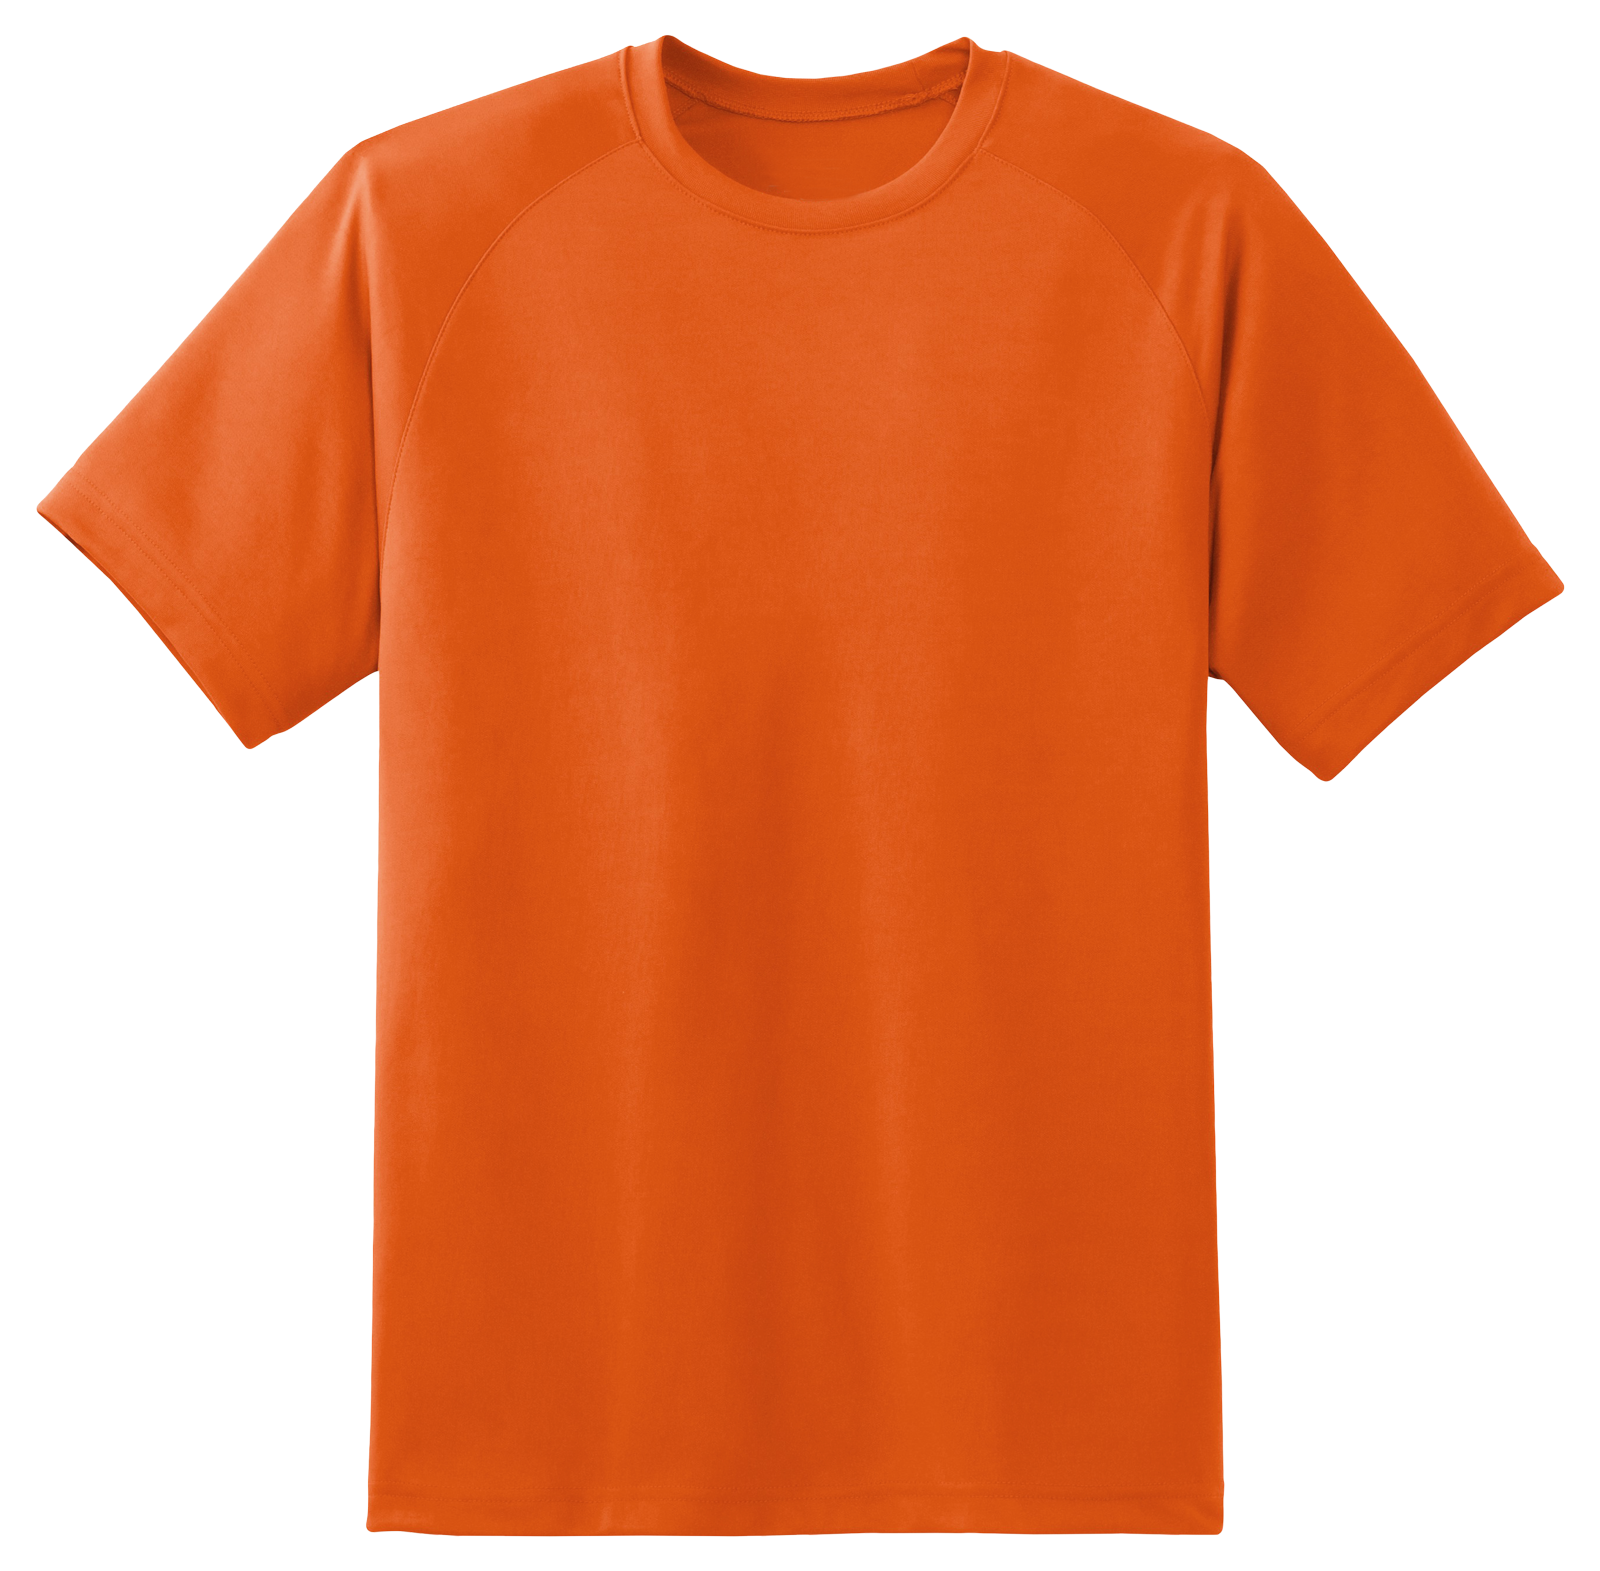 Plain Orange T Shirt PNG image